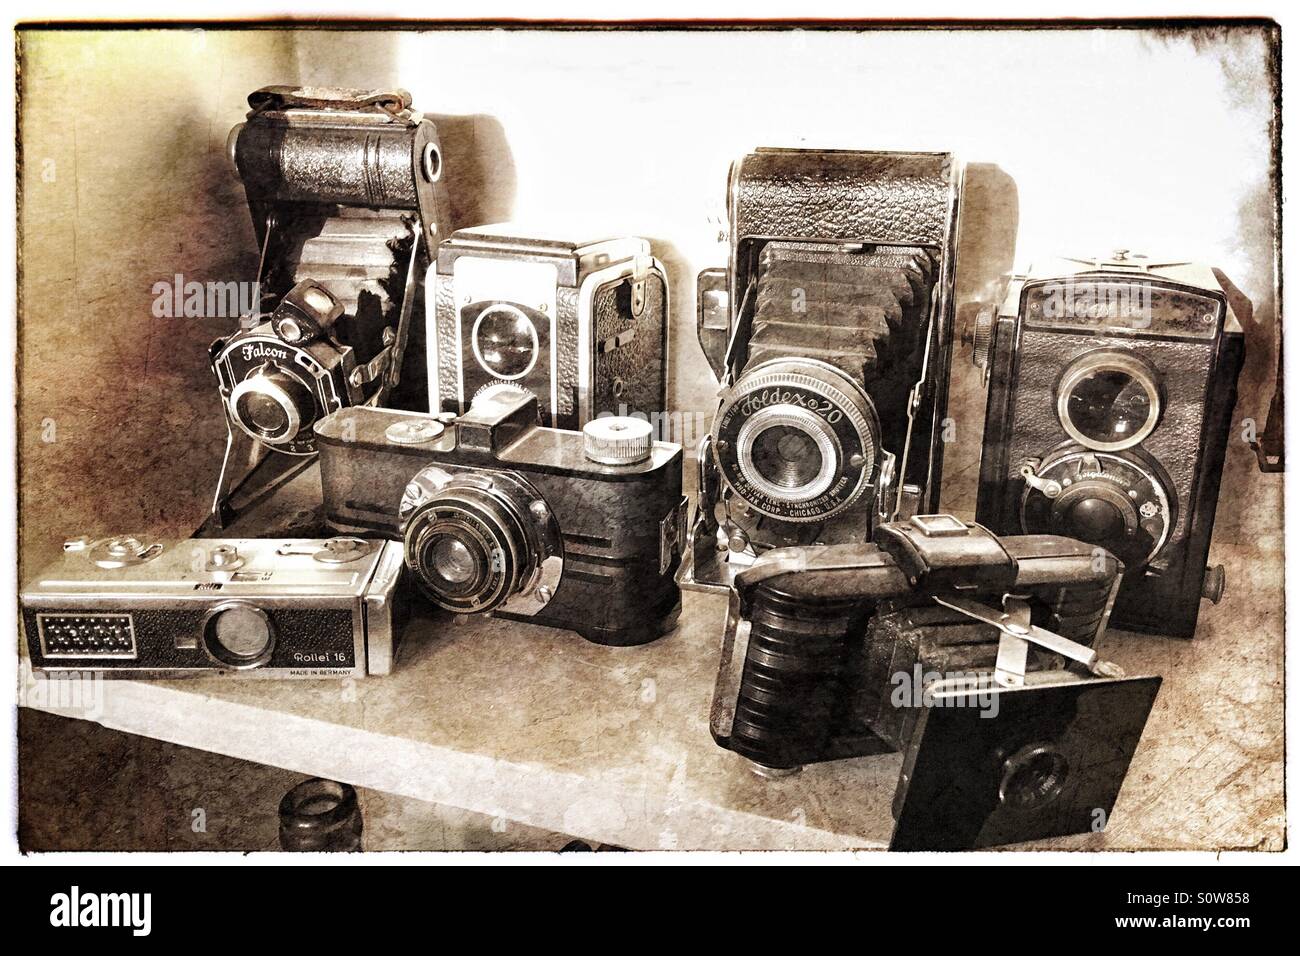 Colección de cámaras antiguas Fotografía de stock - Alamy